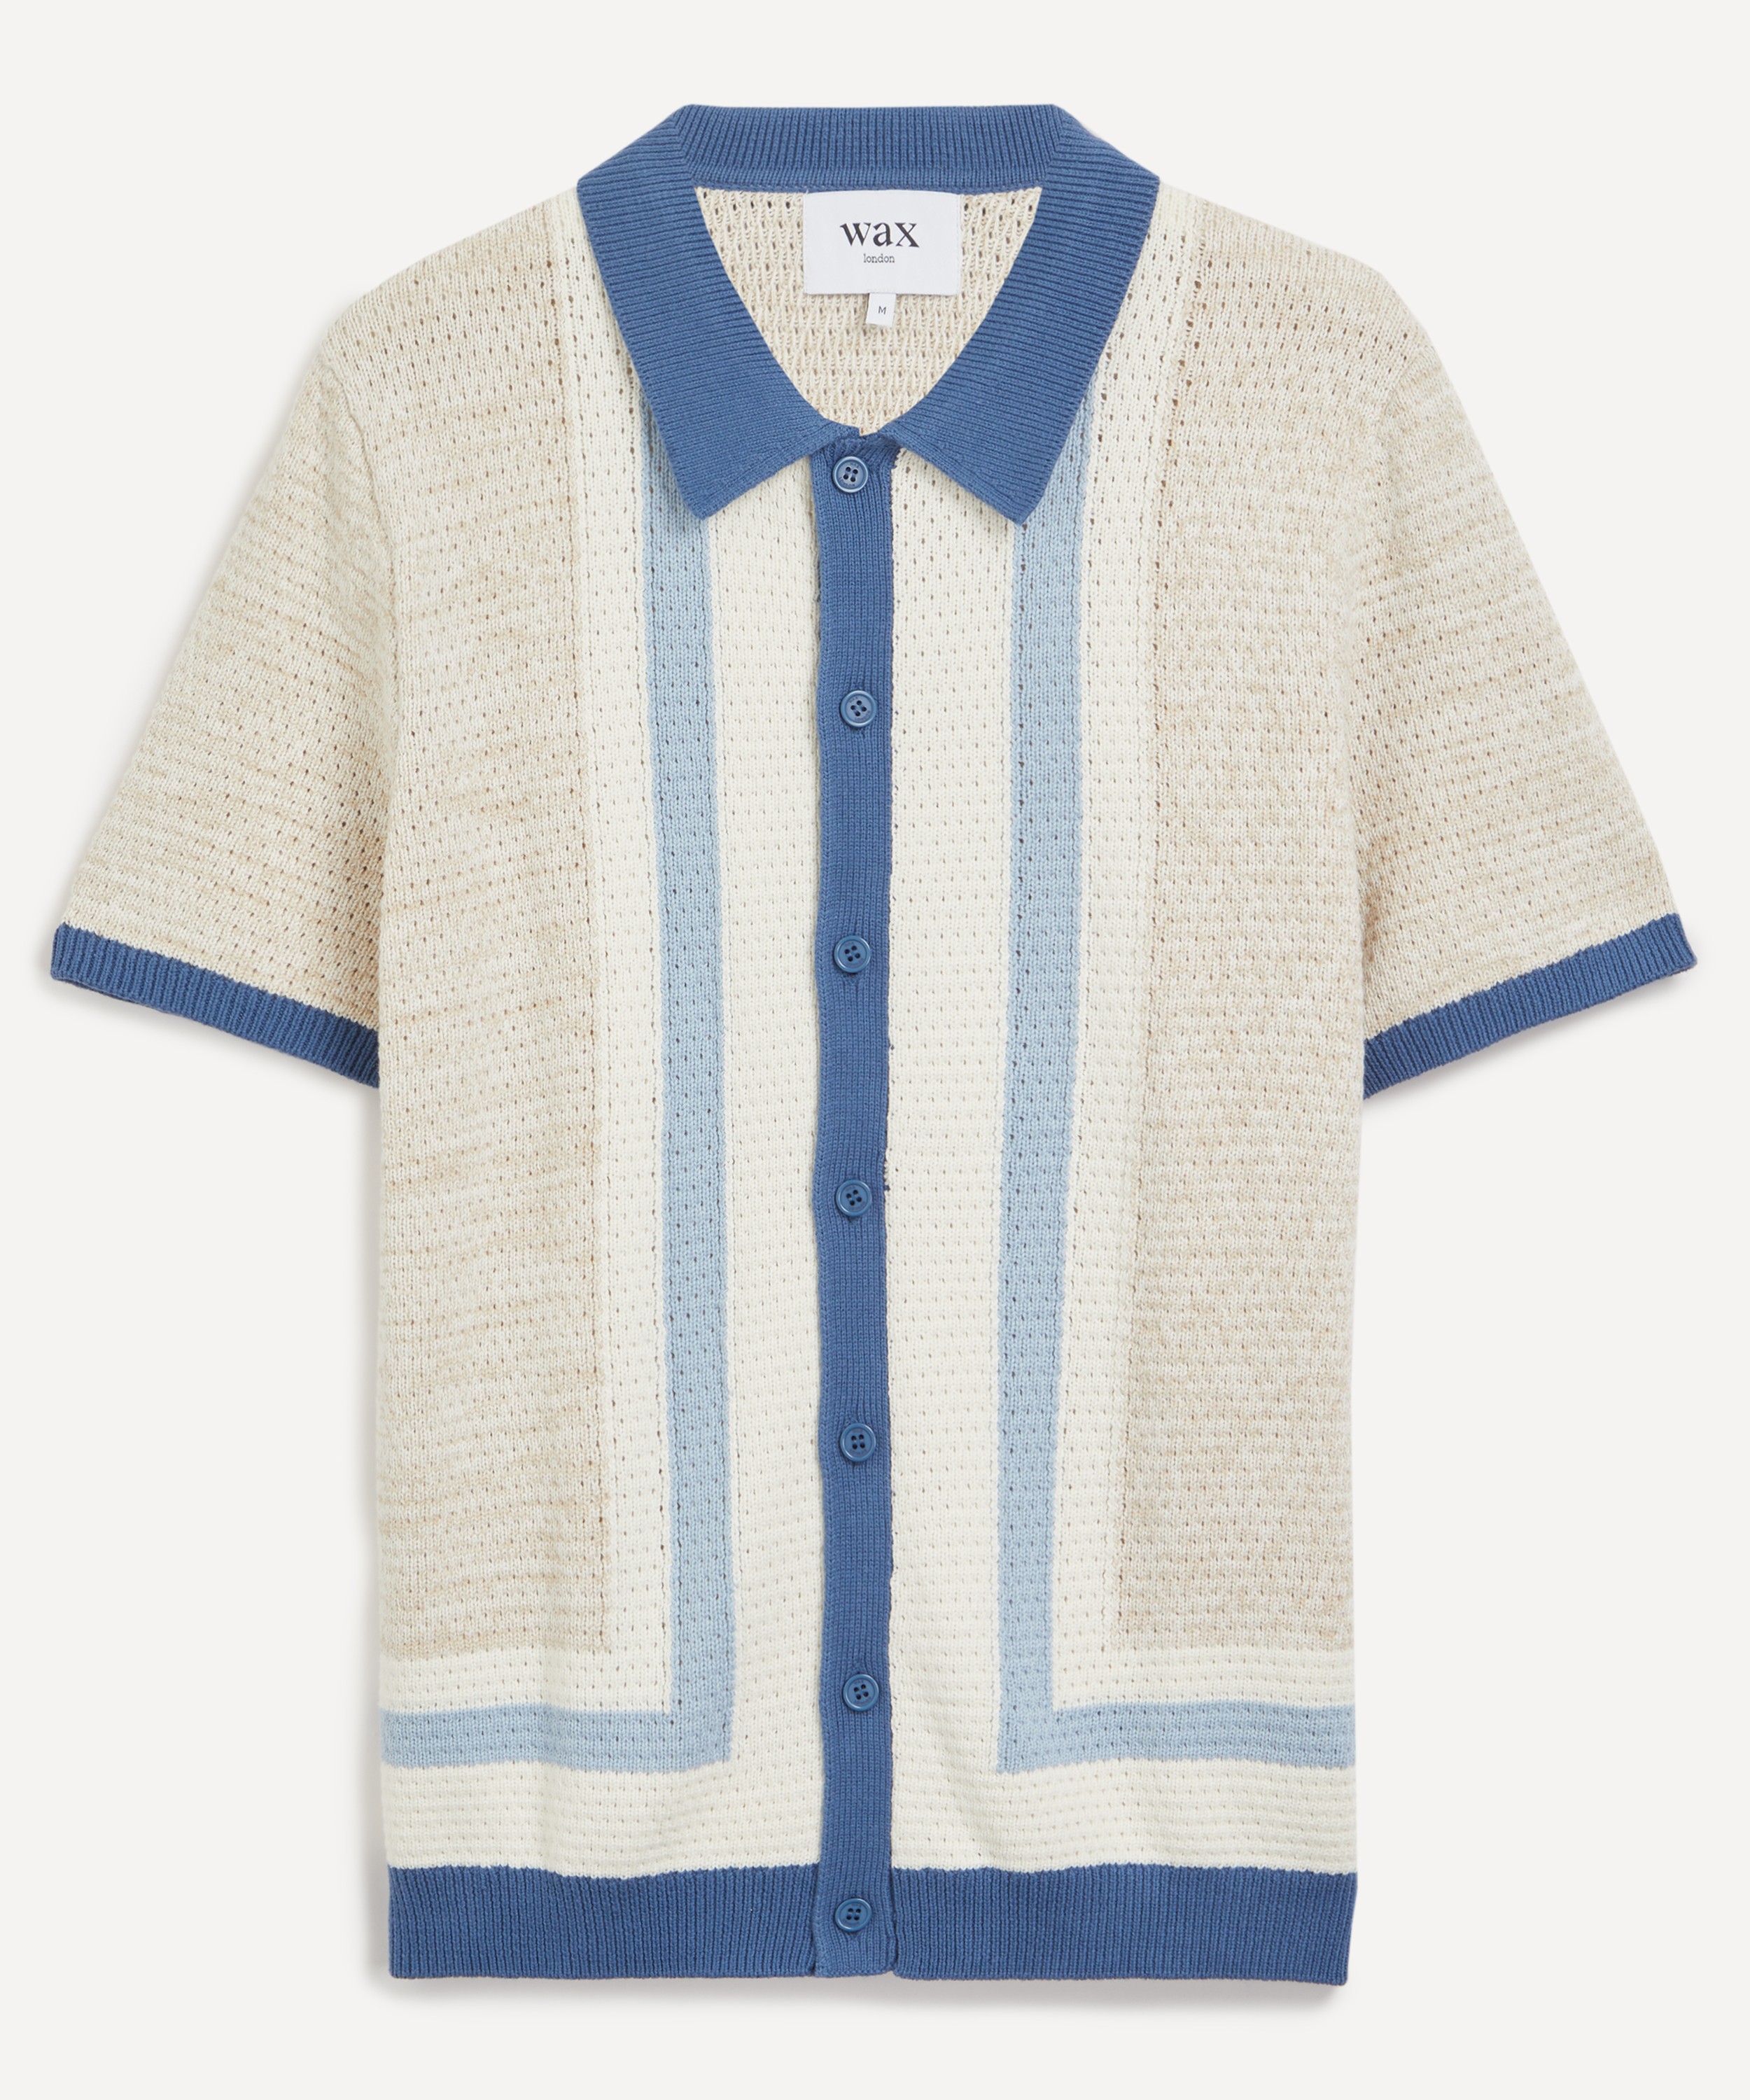 Wax London - Tellaro Knit Shirt